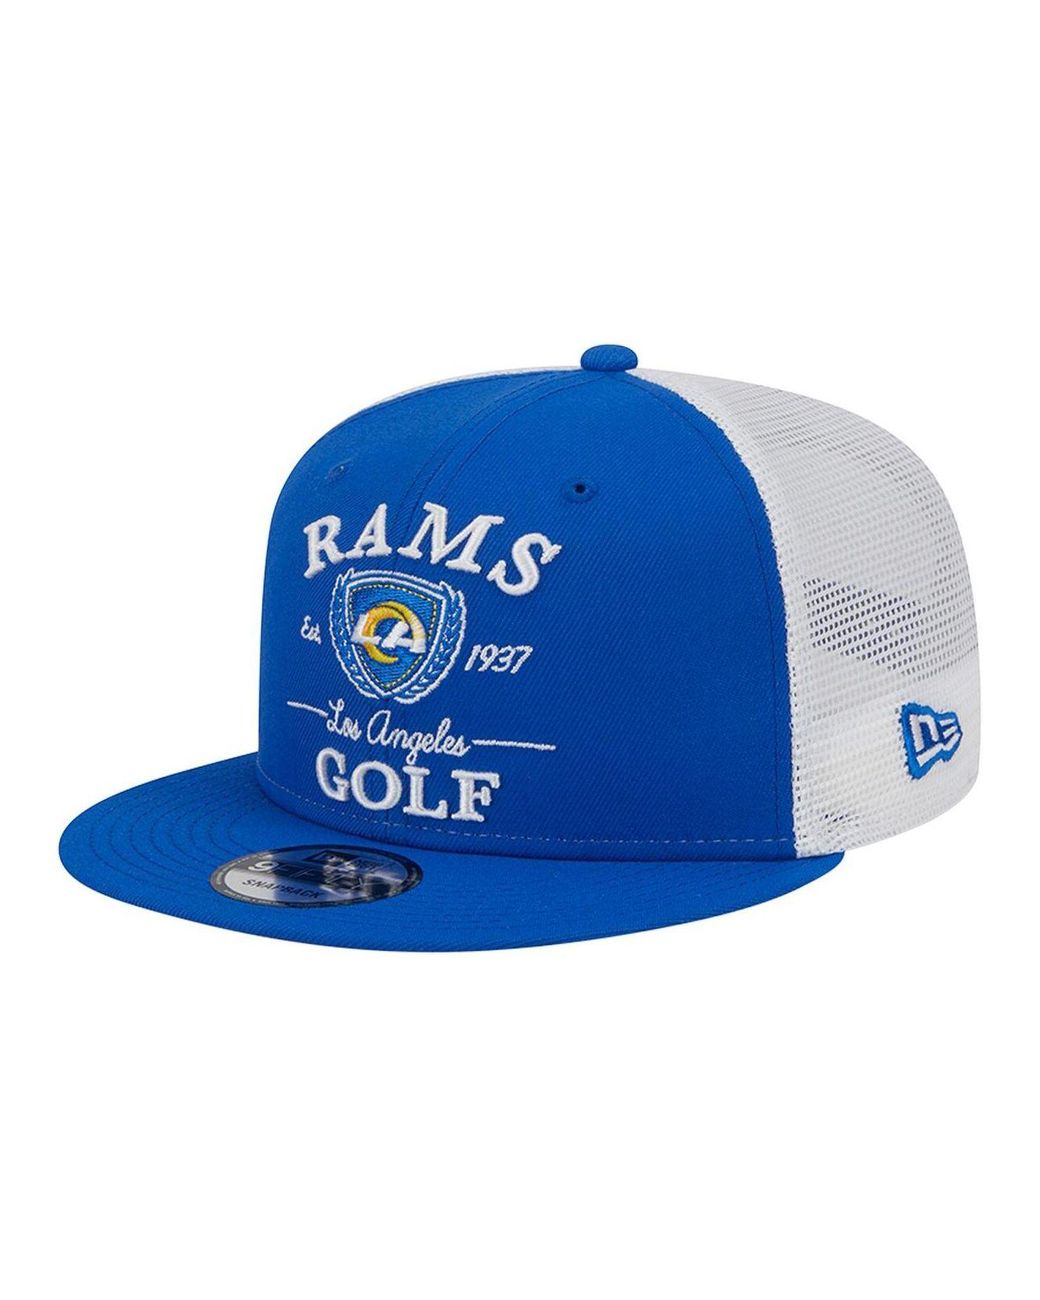 Lids Los Angeles Rams New Era Team Split 9FIFTY Snapback Hat - Royal/Gold